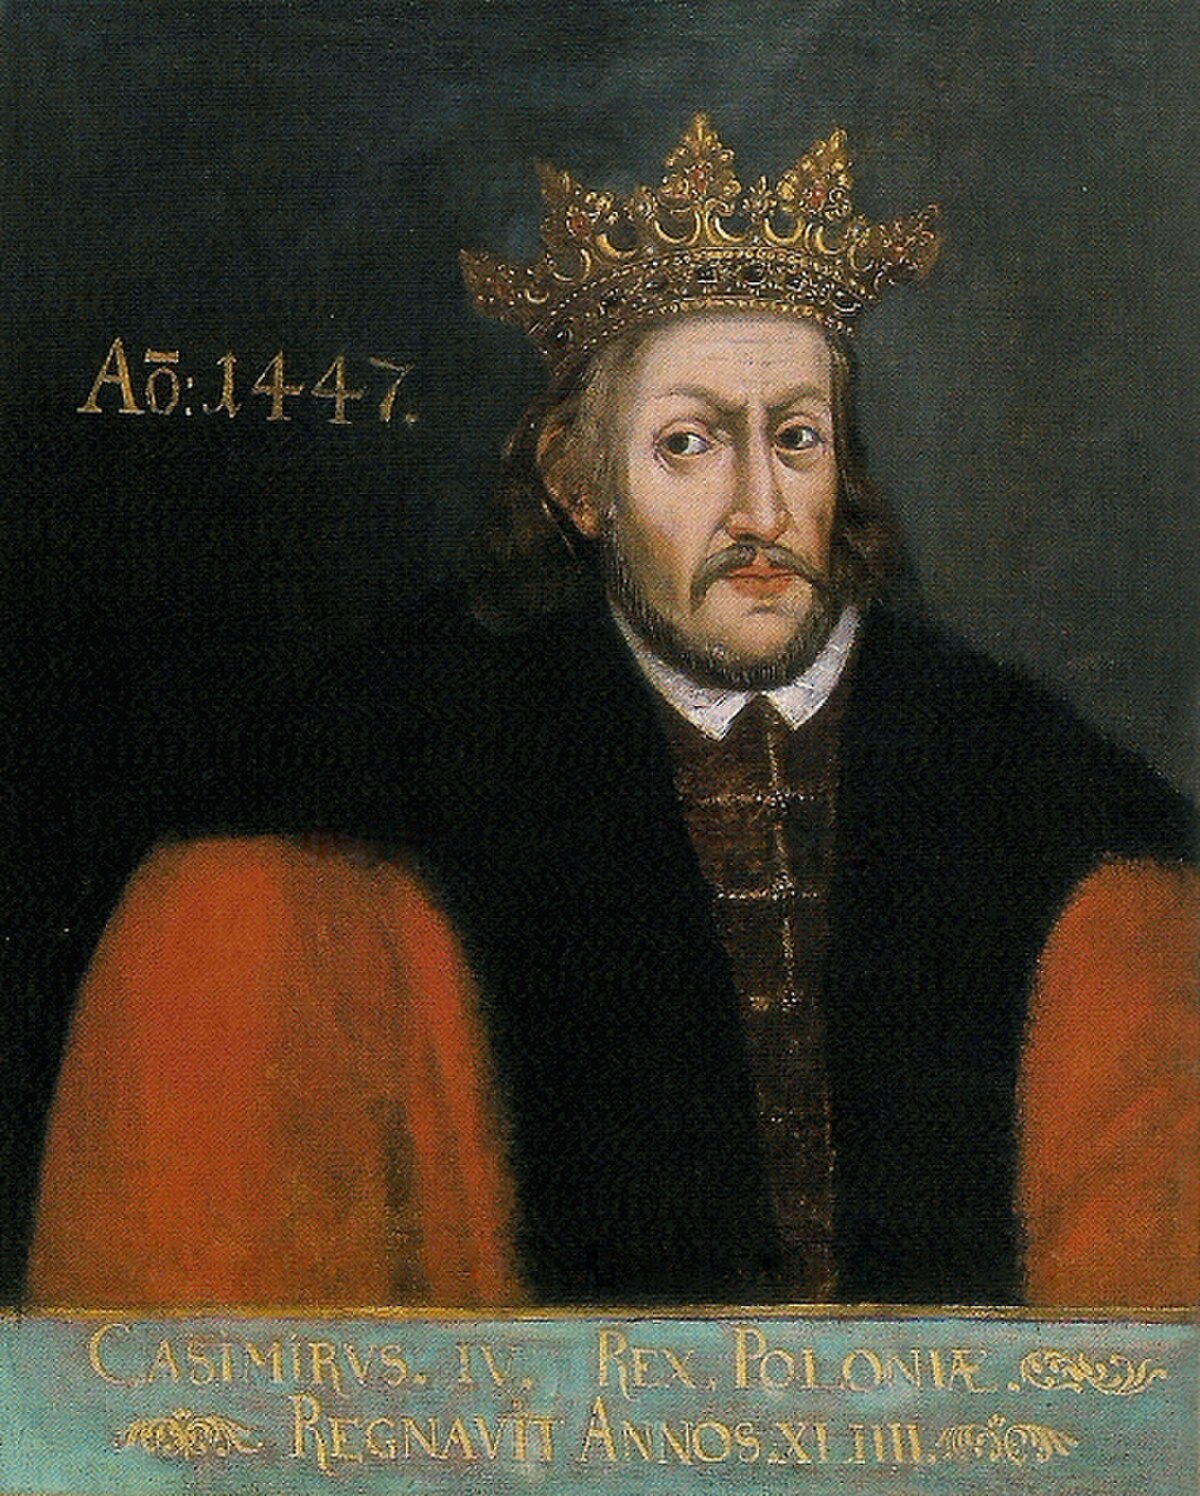 Władysław III እና Casimir IV Jagiellon